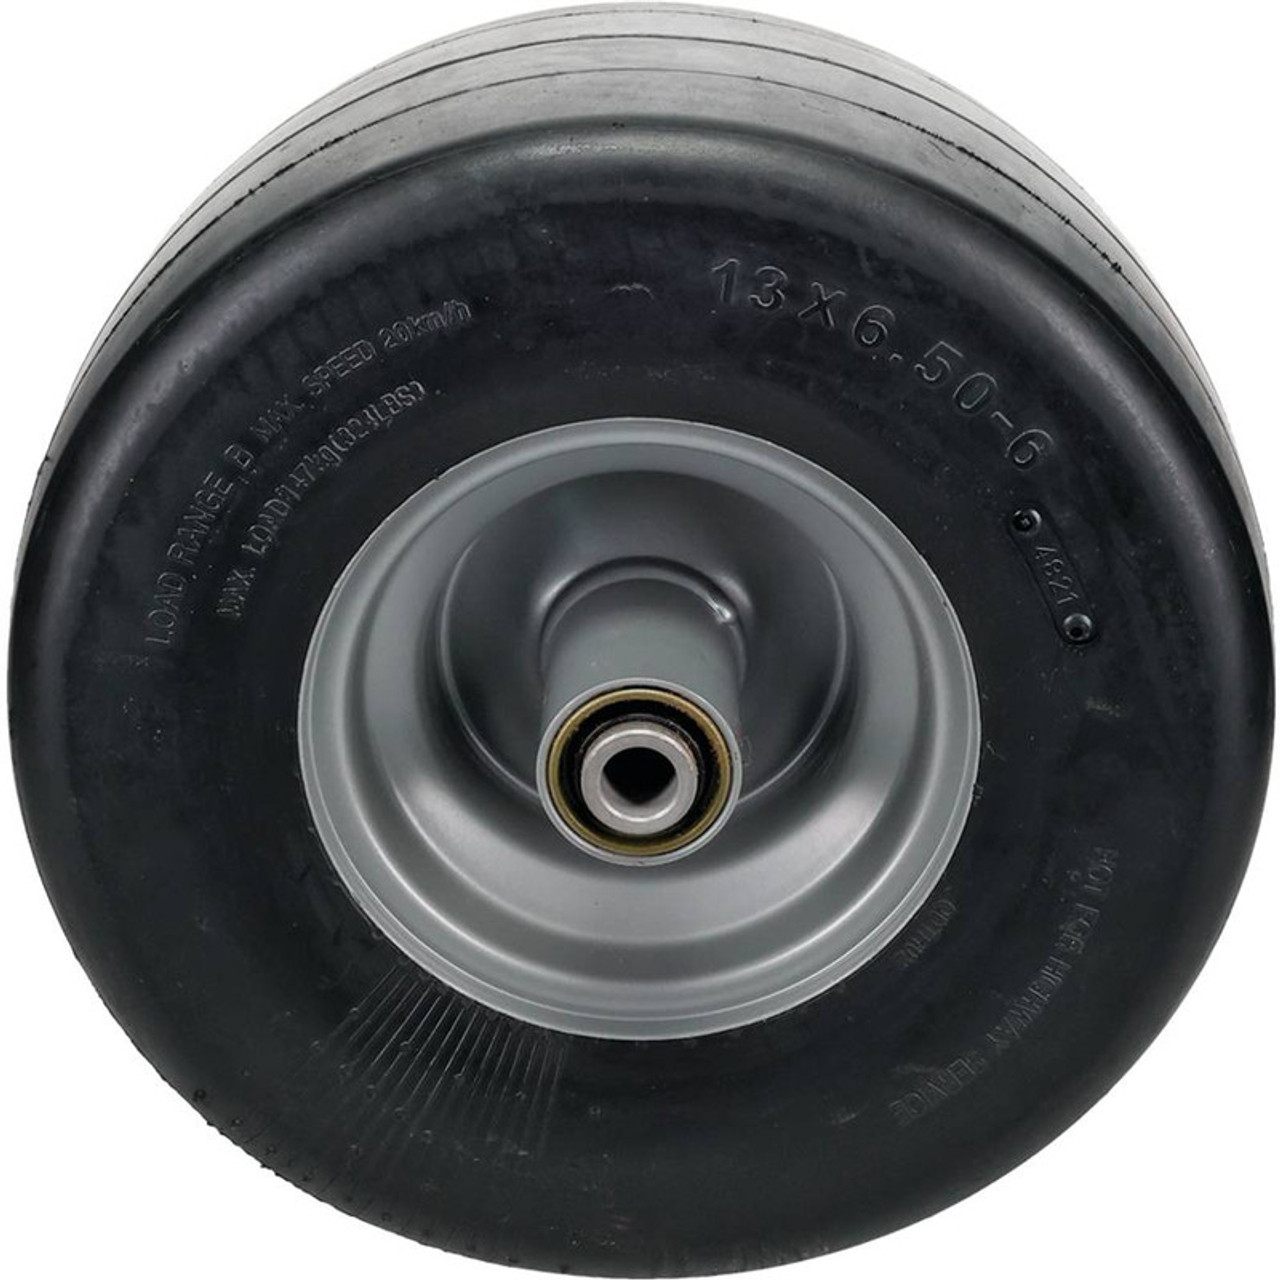 Caster Wheel for Hustler Super Z, 54", 60", 72" Cut, X One 60" Deck 13x6.50-6, Zero Flat Free Tire 607317, 789537